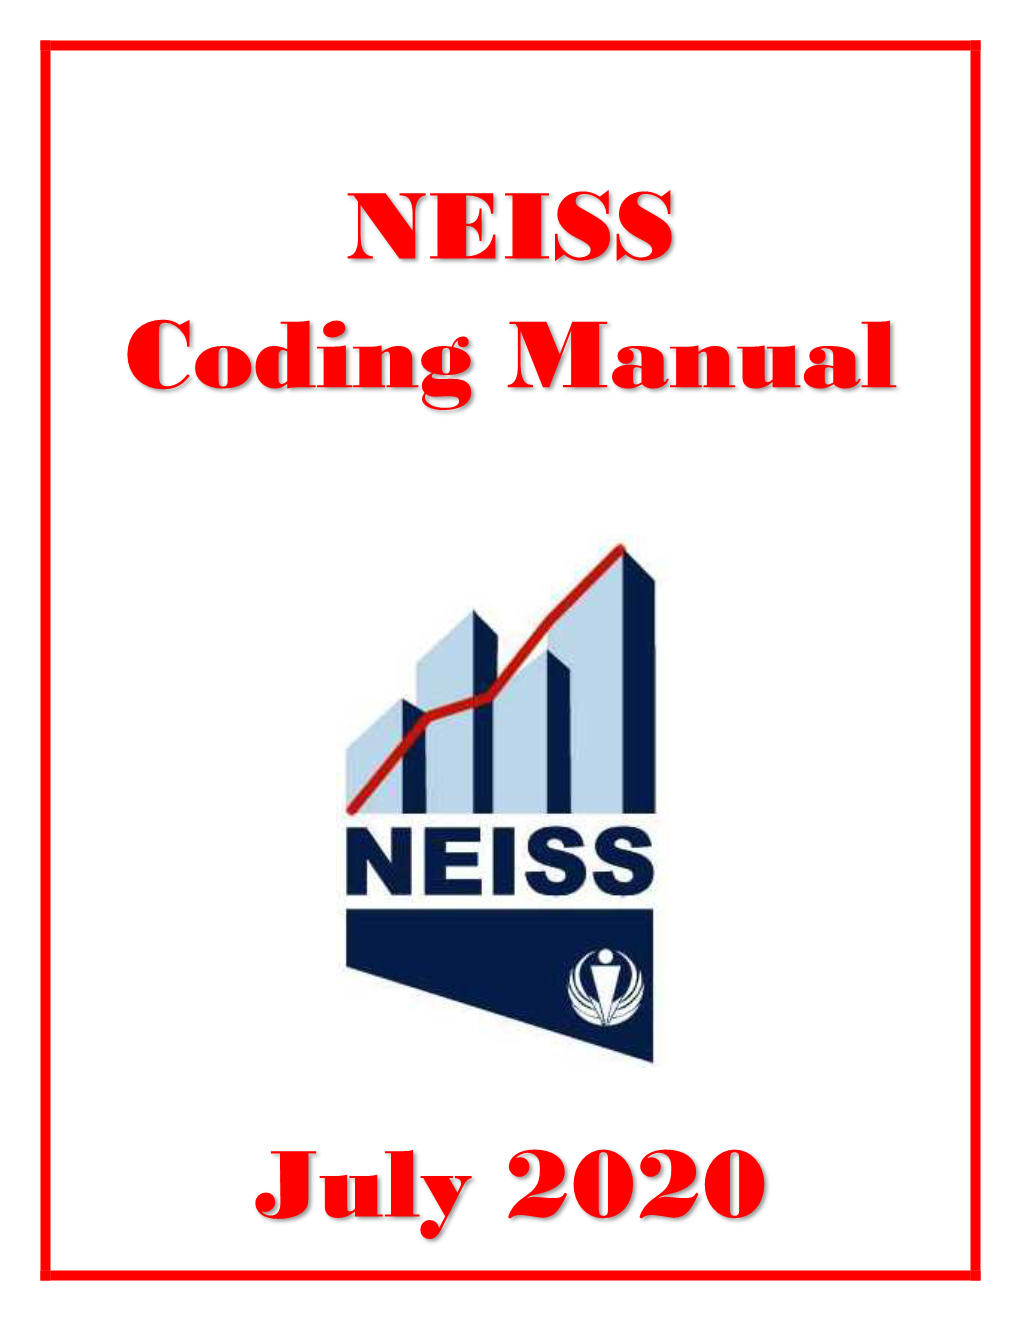 NEISS Coding Manual July 2020